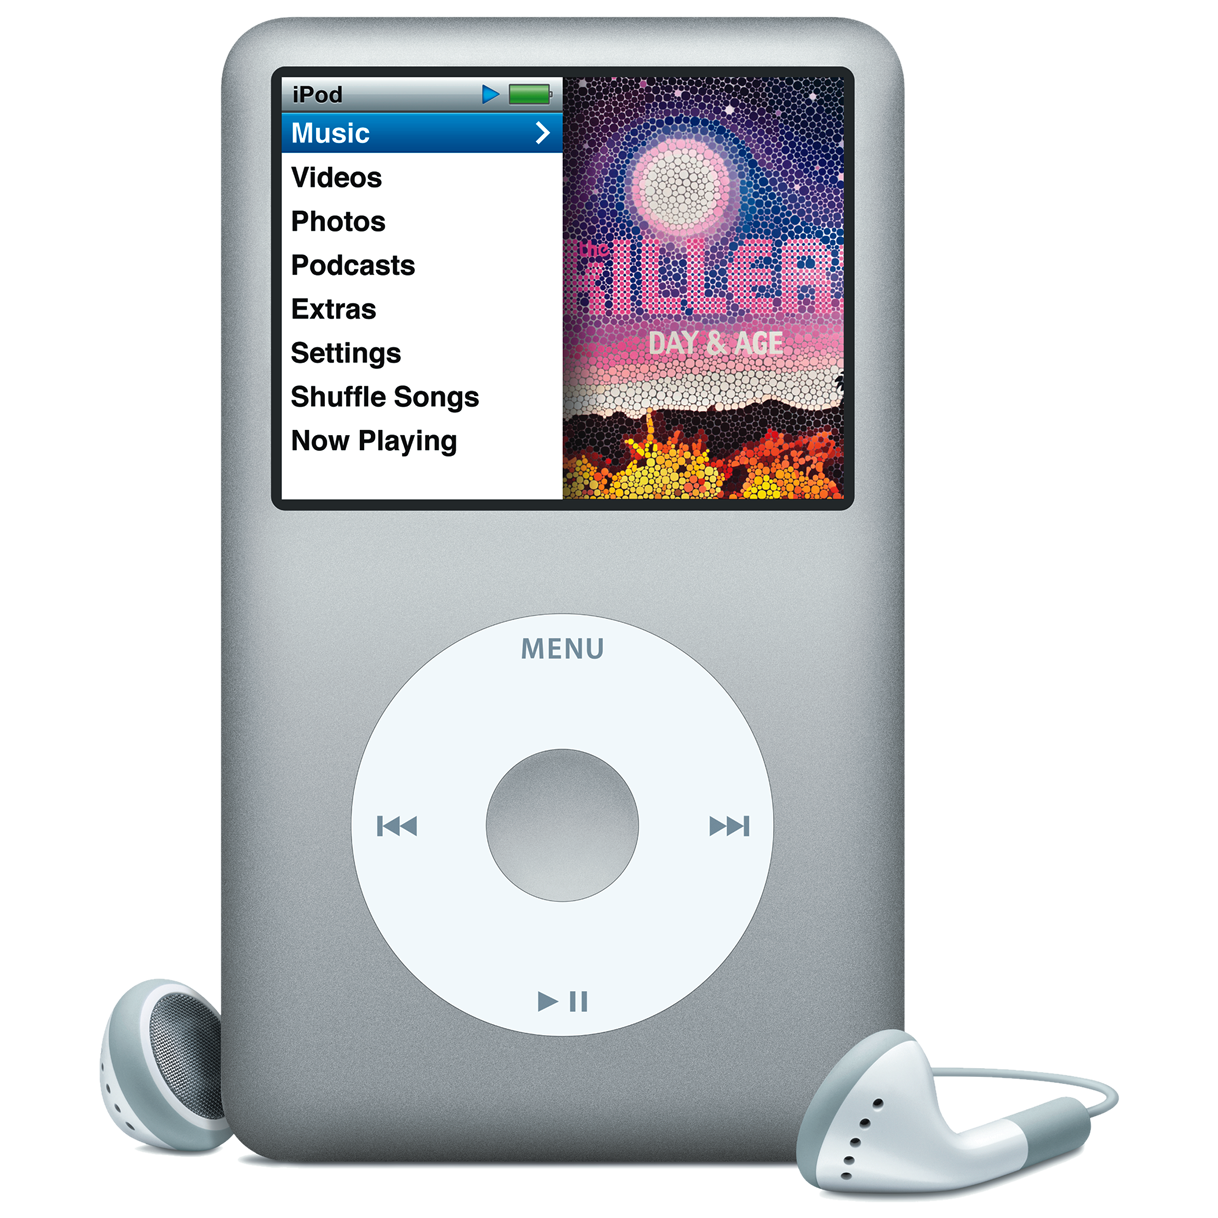 Apple iPod PNG Image File